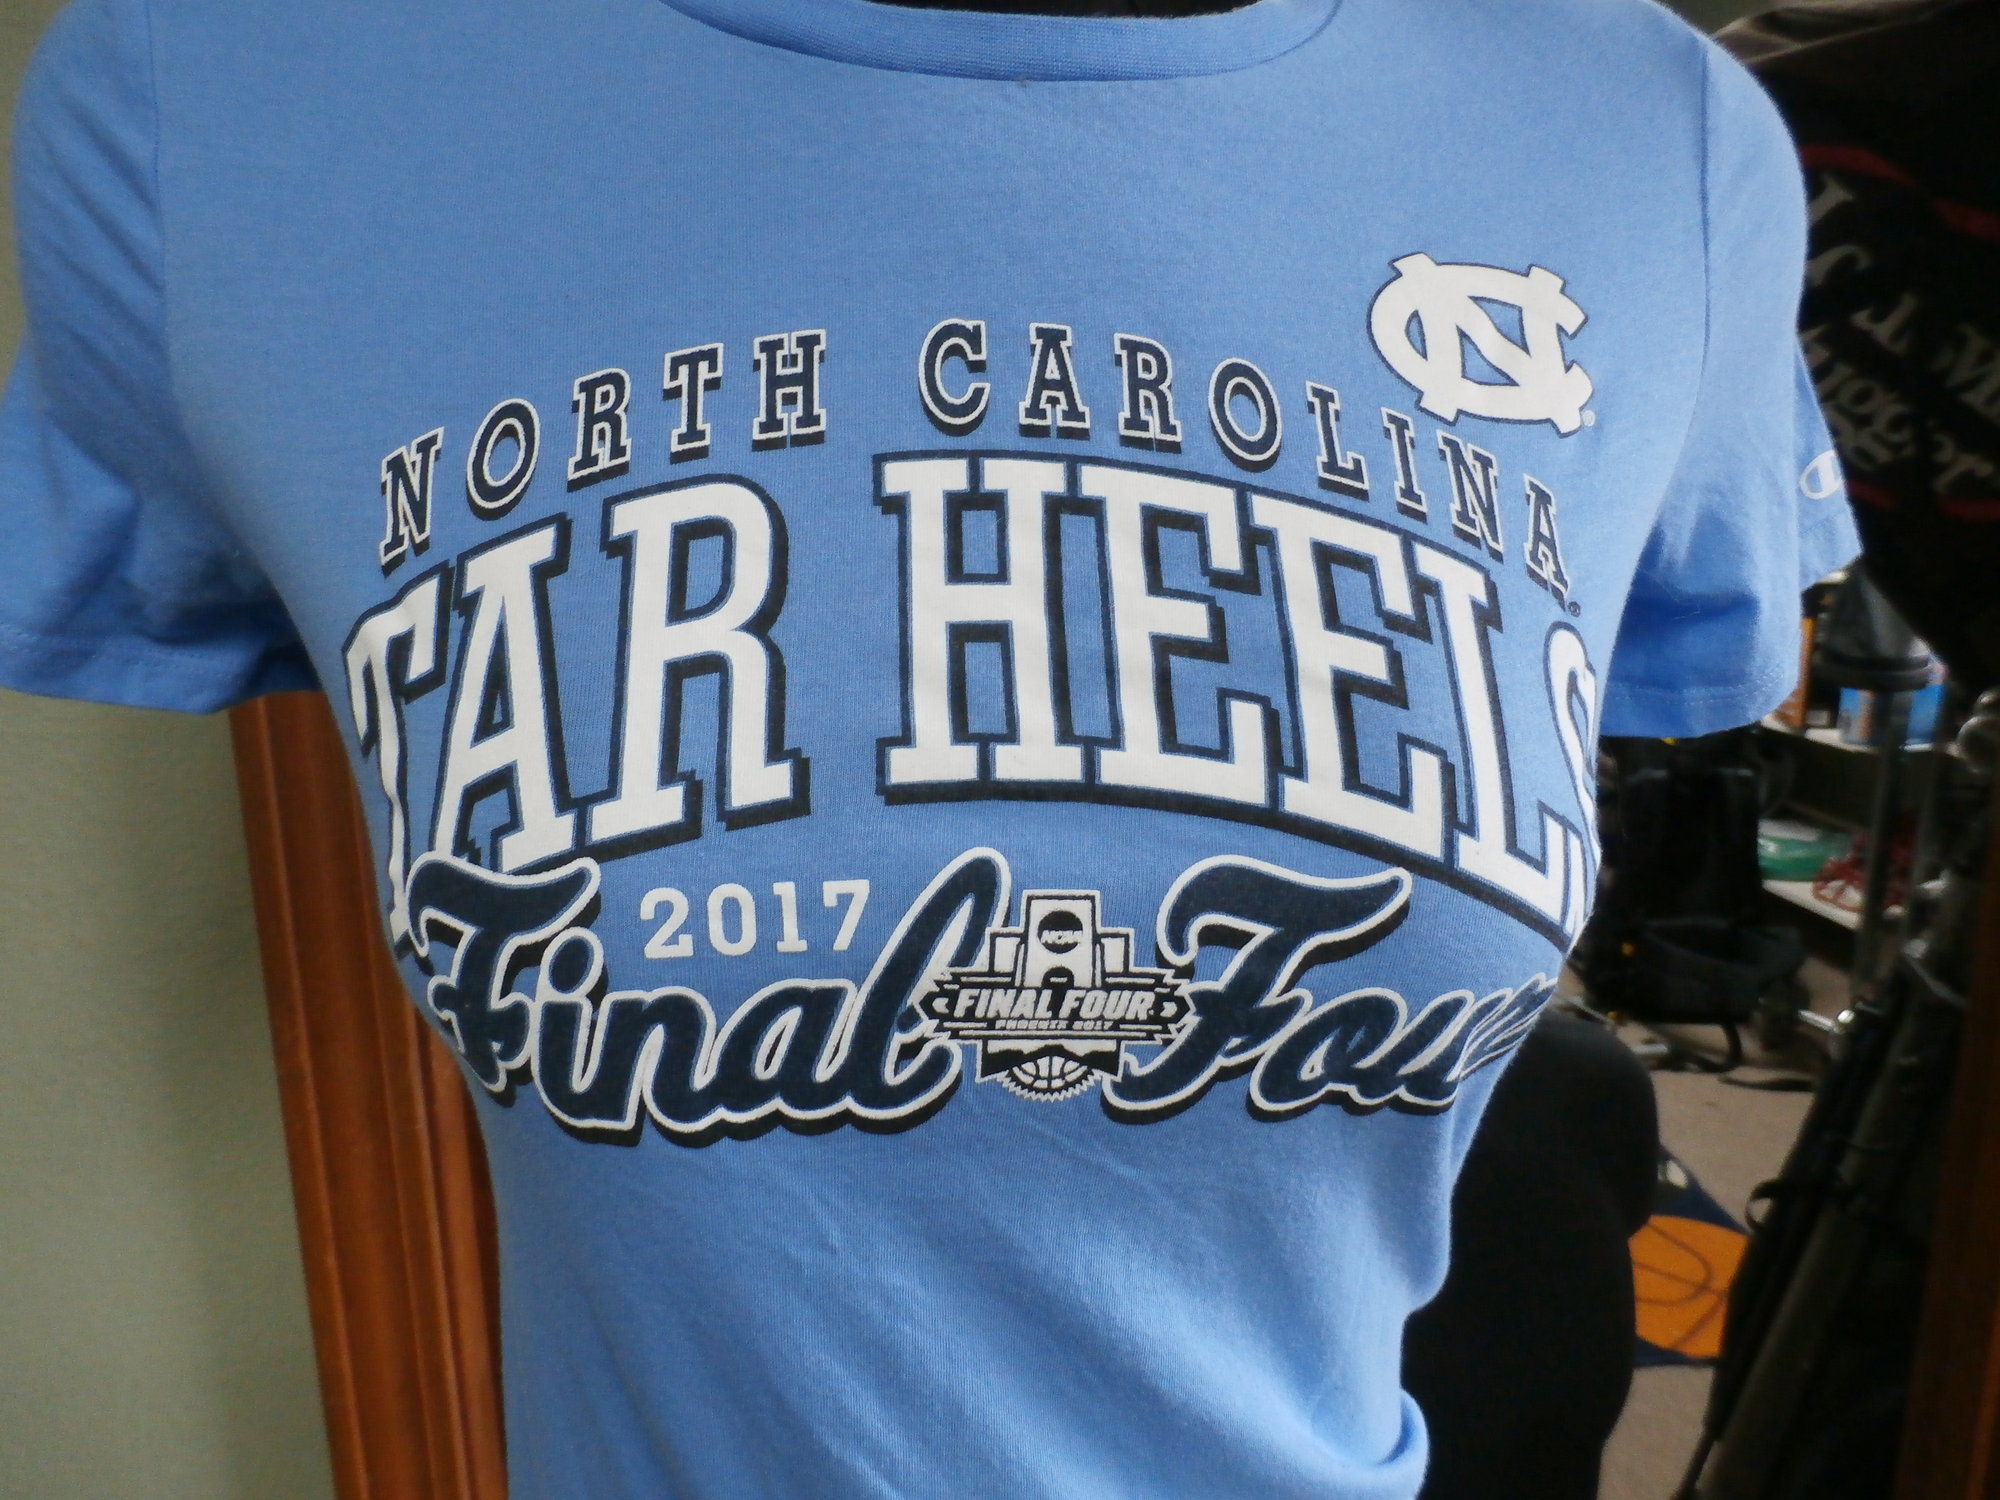 North Carolina player jersey merchandise